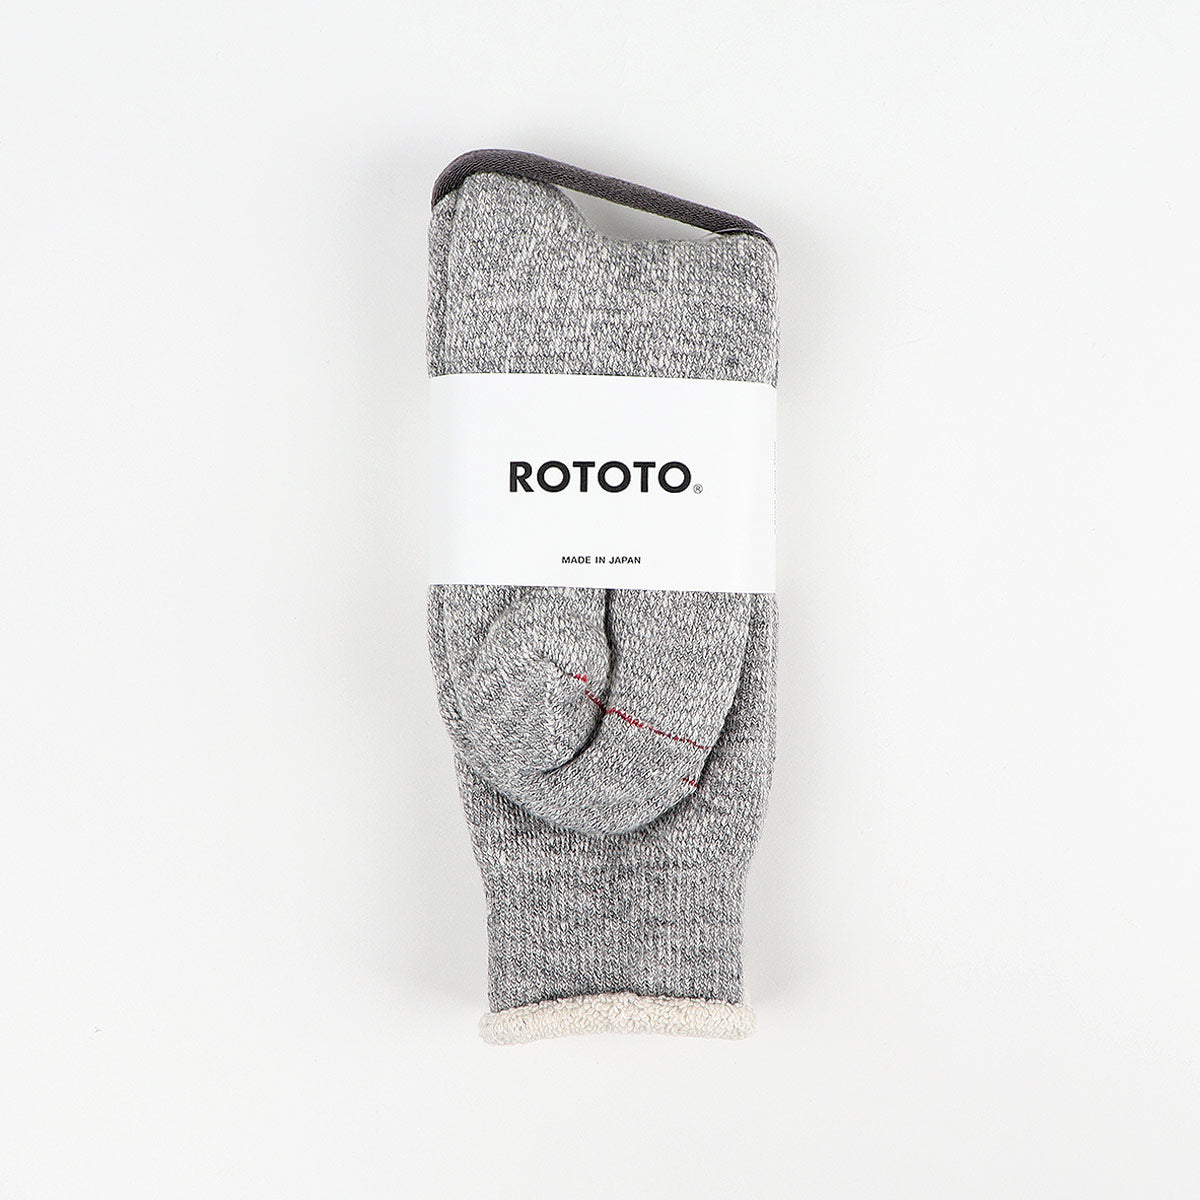 Rototo Double Face Crew Socks, Medium Grey, Detail Shot 2